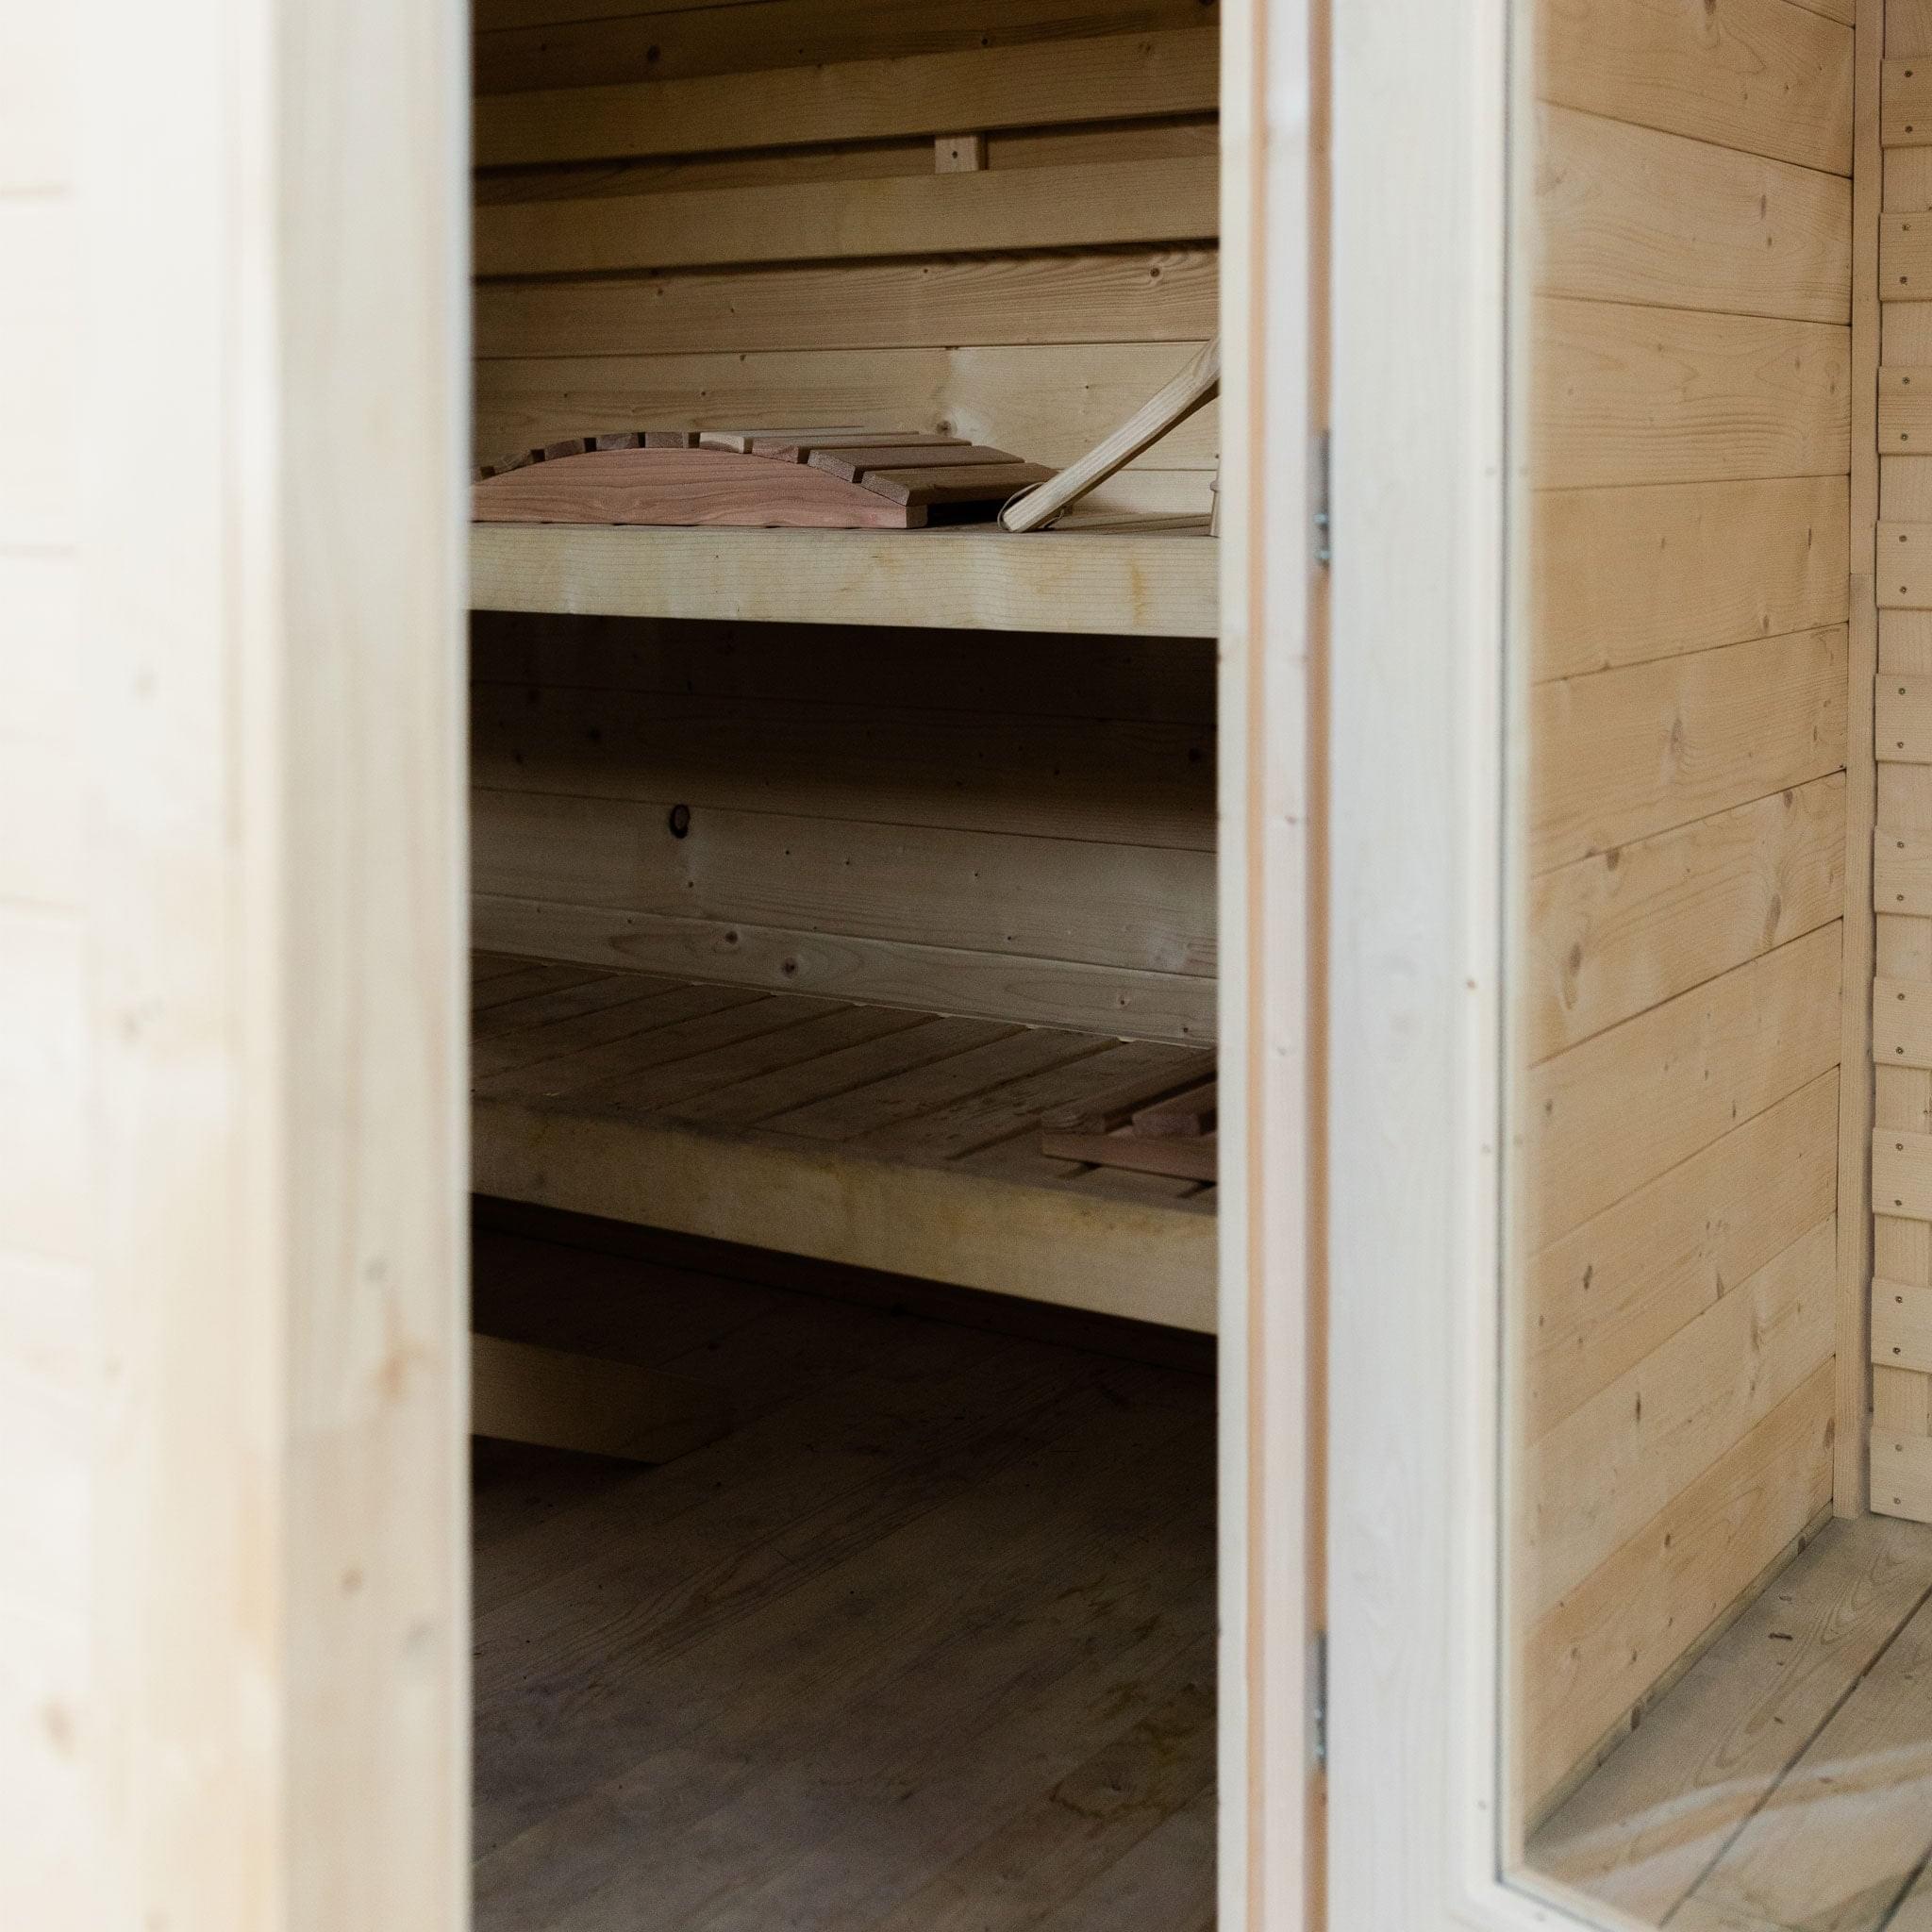 Almost Heaven Timberline 6-Person Outdoor Cabin Sauna